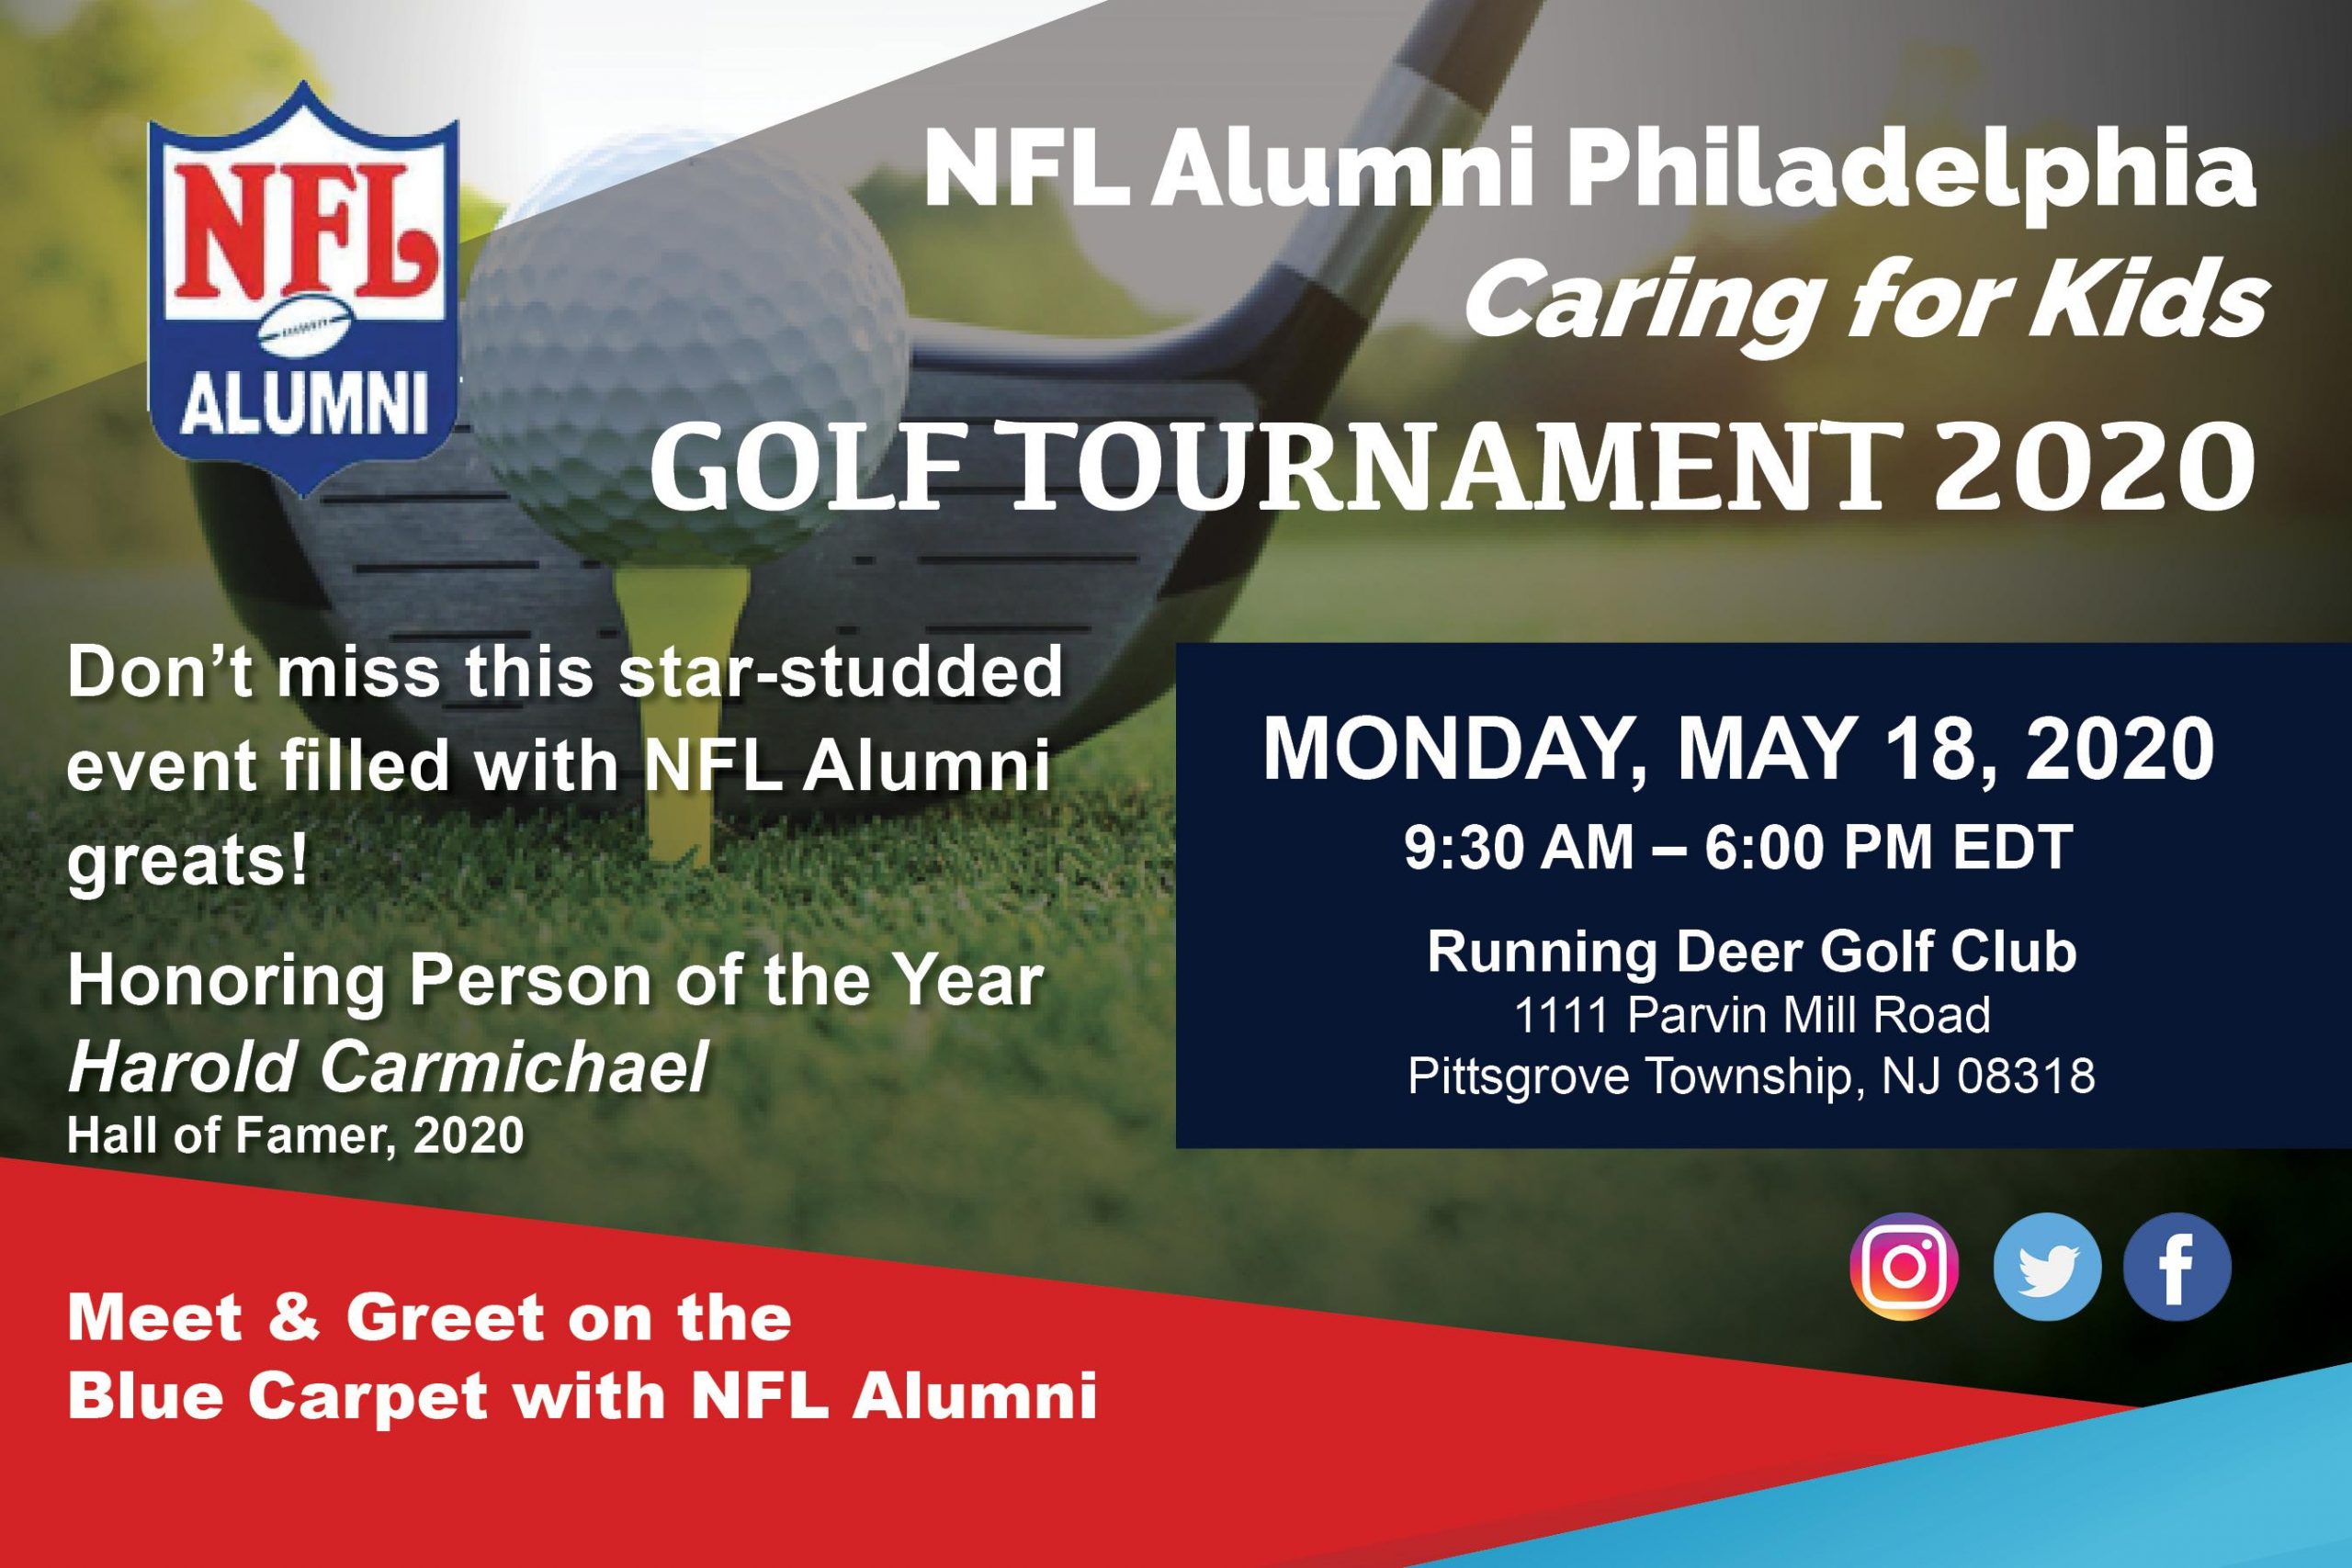 NFL Alumni Philadelphia " Caring for Kids" Golf Tournament